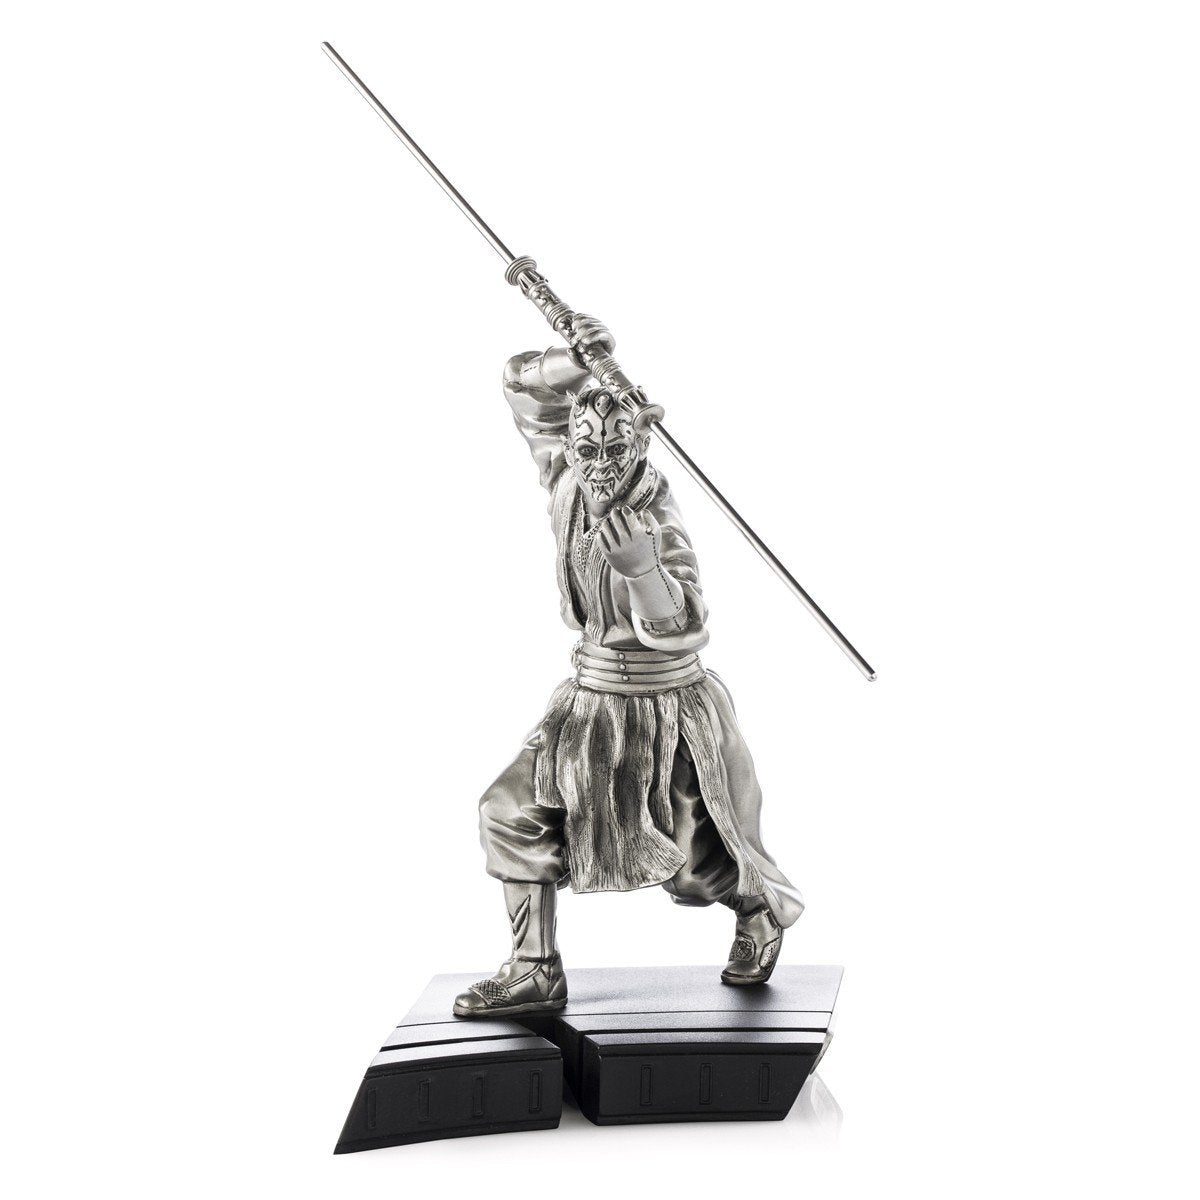 Star Wars Darth Maul Limited Edition Figurine - Collectible Statue